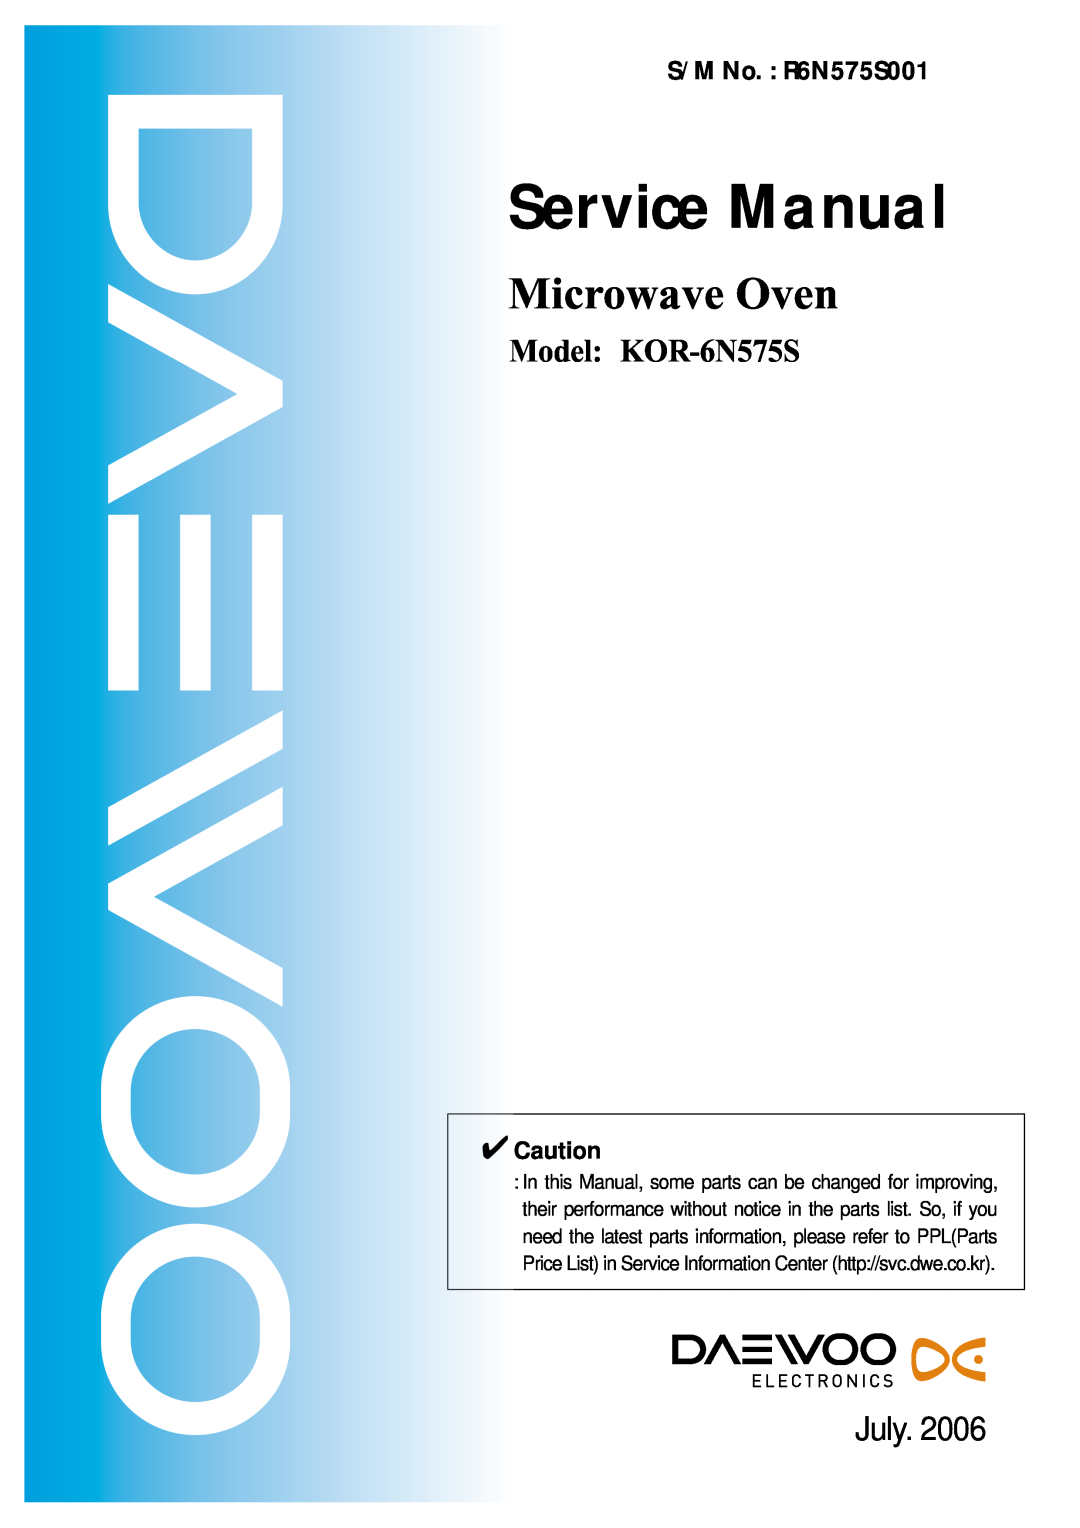 Daewoo service manual Microwave Oven, Model KOR-6N575S, July, S/M No. R6N575S001 